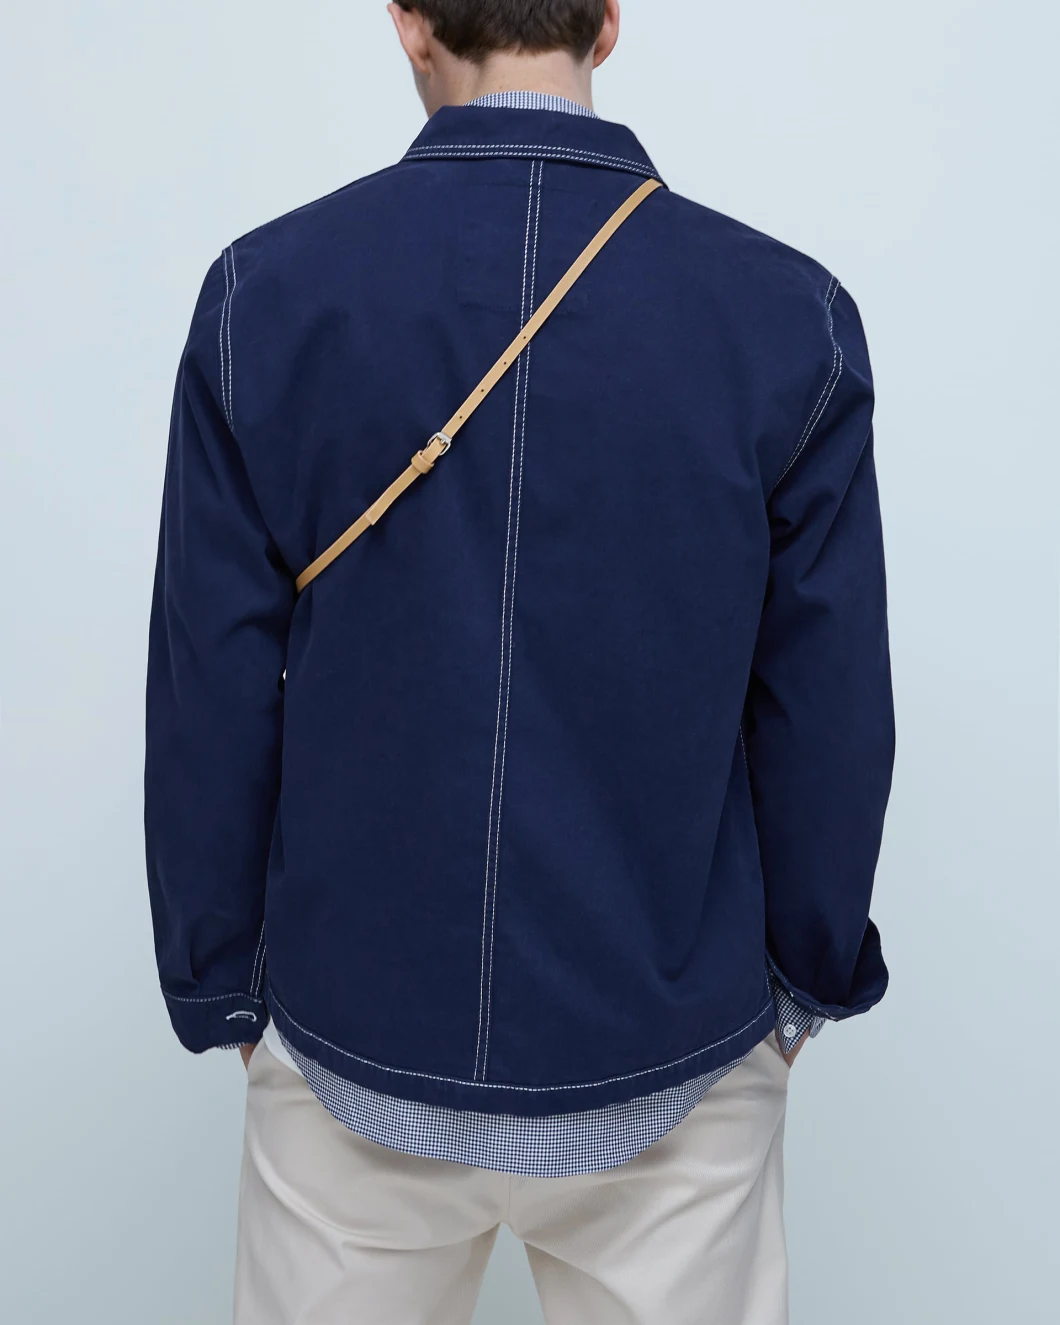 Wholesale Custom 100%Cotton Men's Denim Jacket Fashion Winter Coats